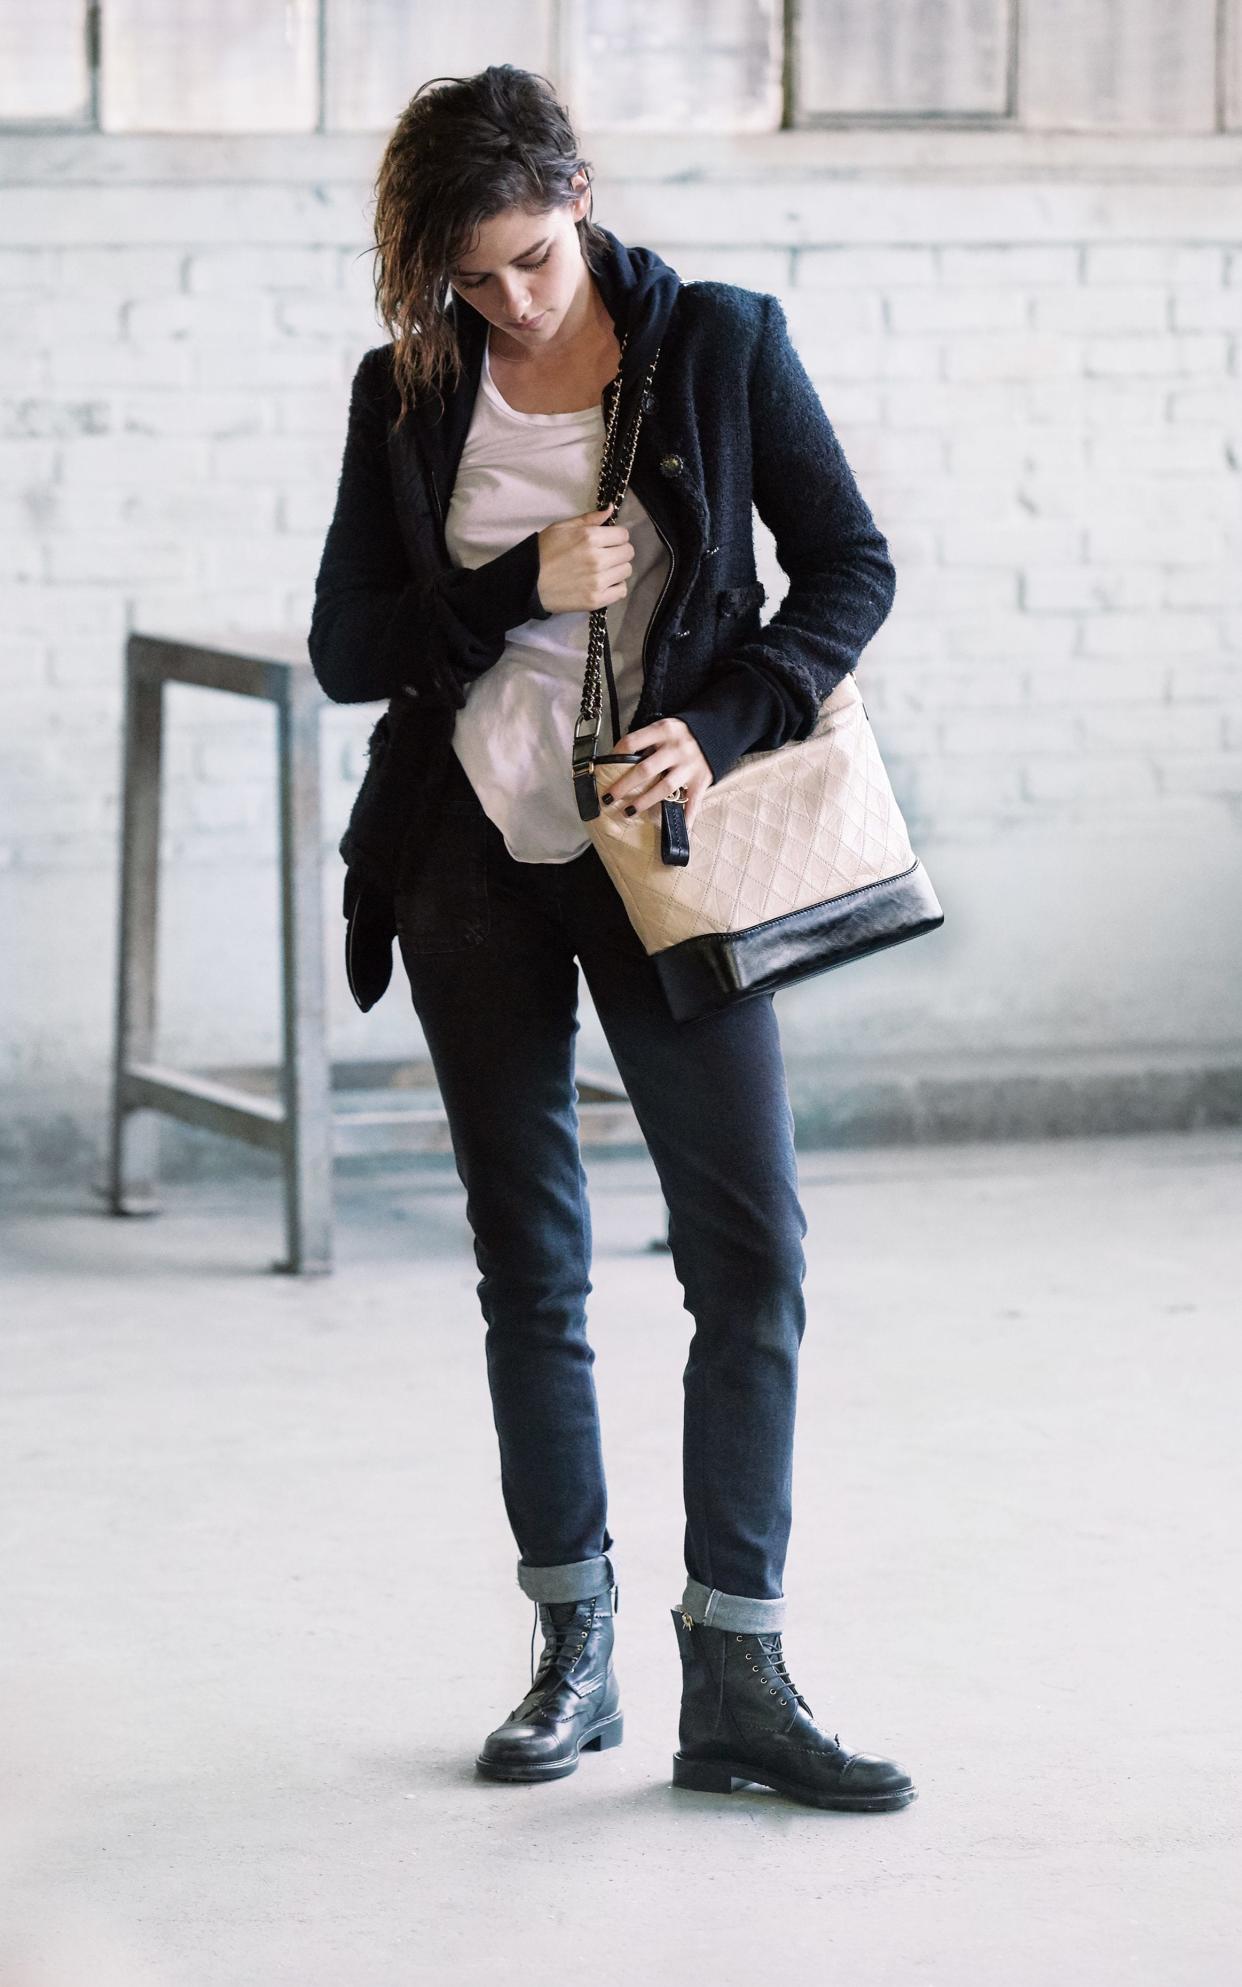 Kristen Stewart on set with Chanel's new Gabrielle bag - Chanel